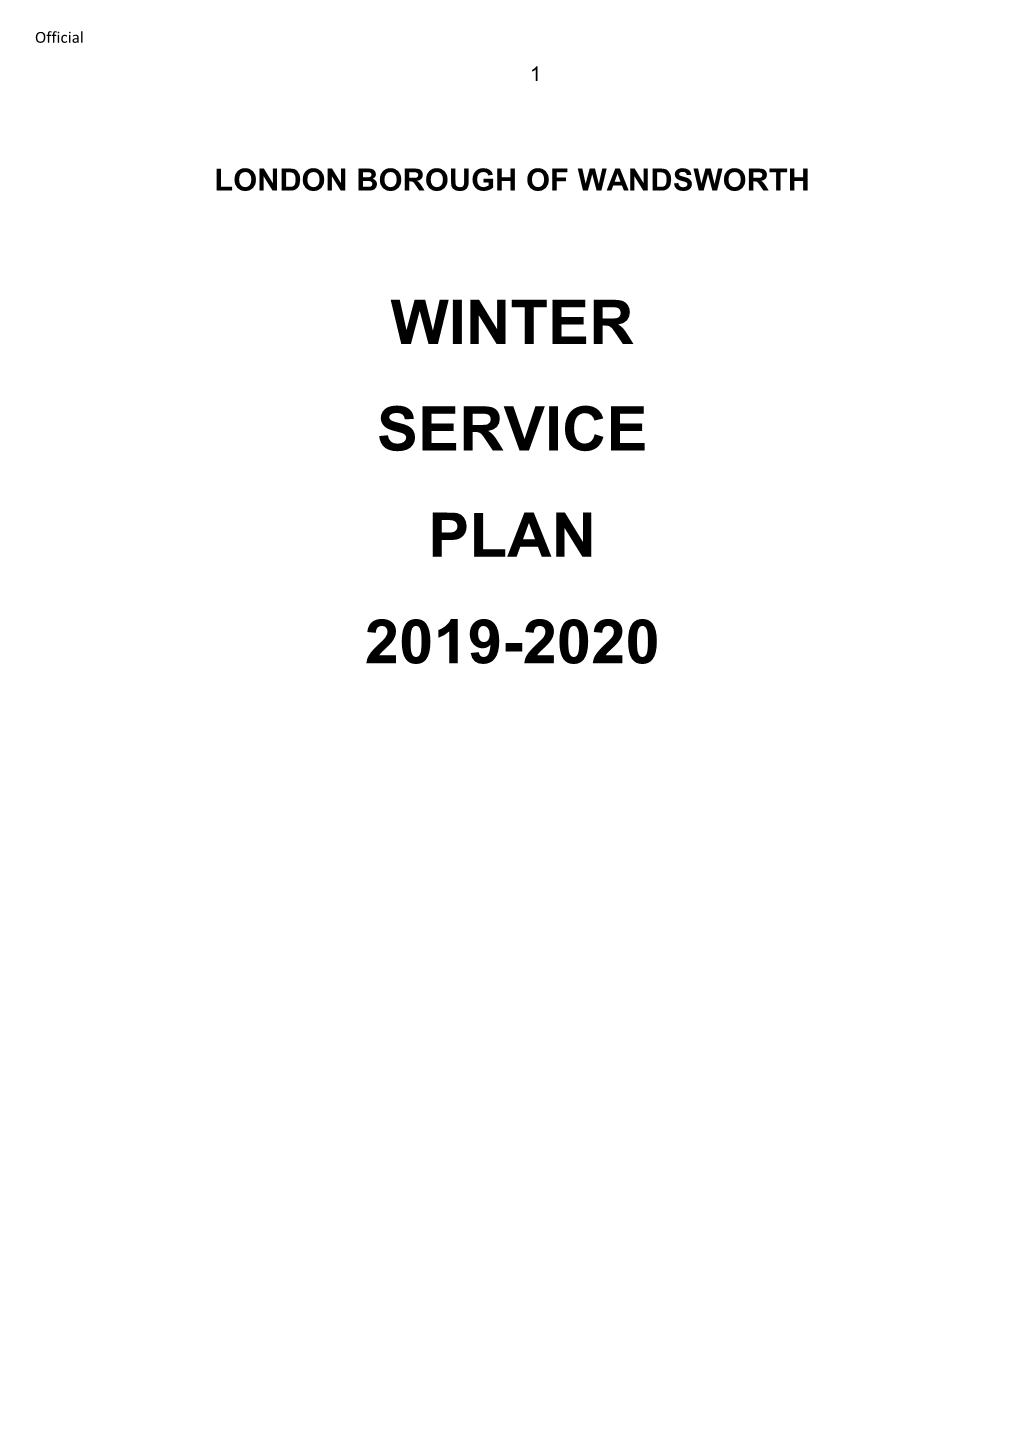 Winter Service Plan 2019-2020